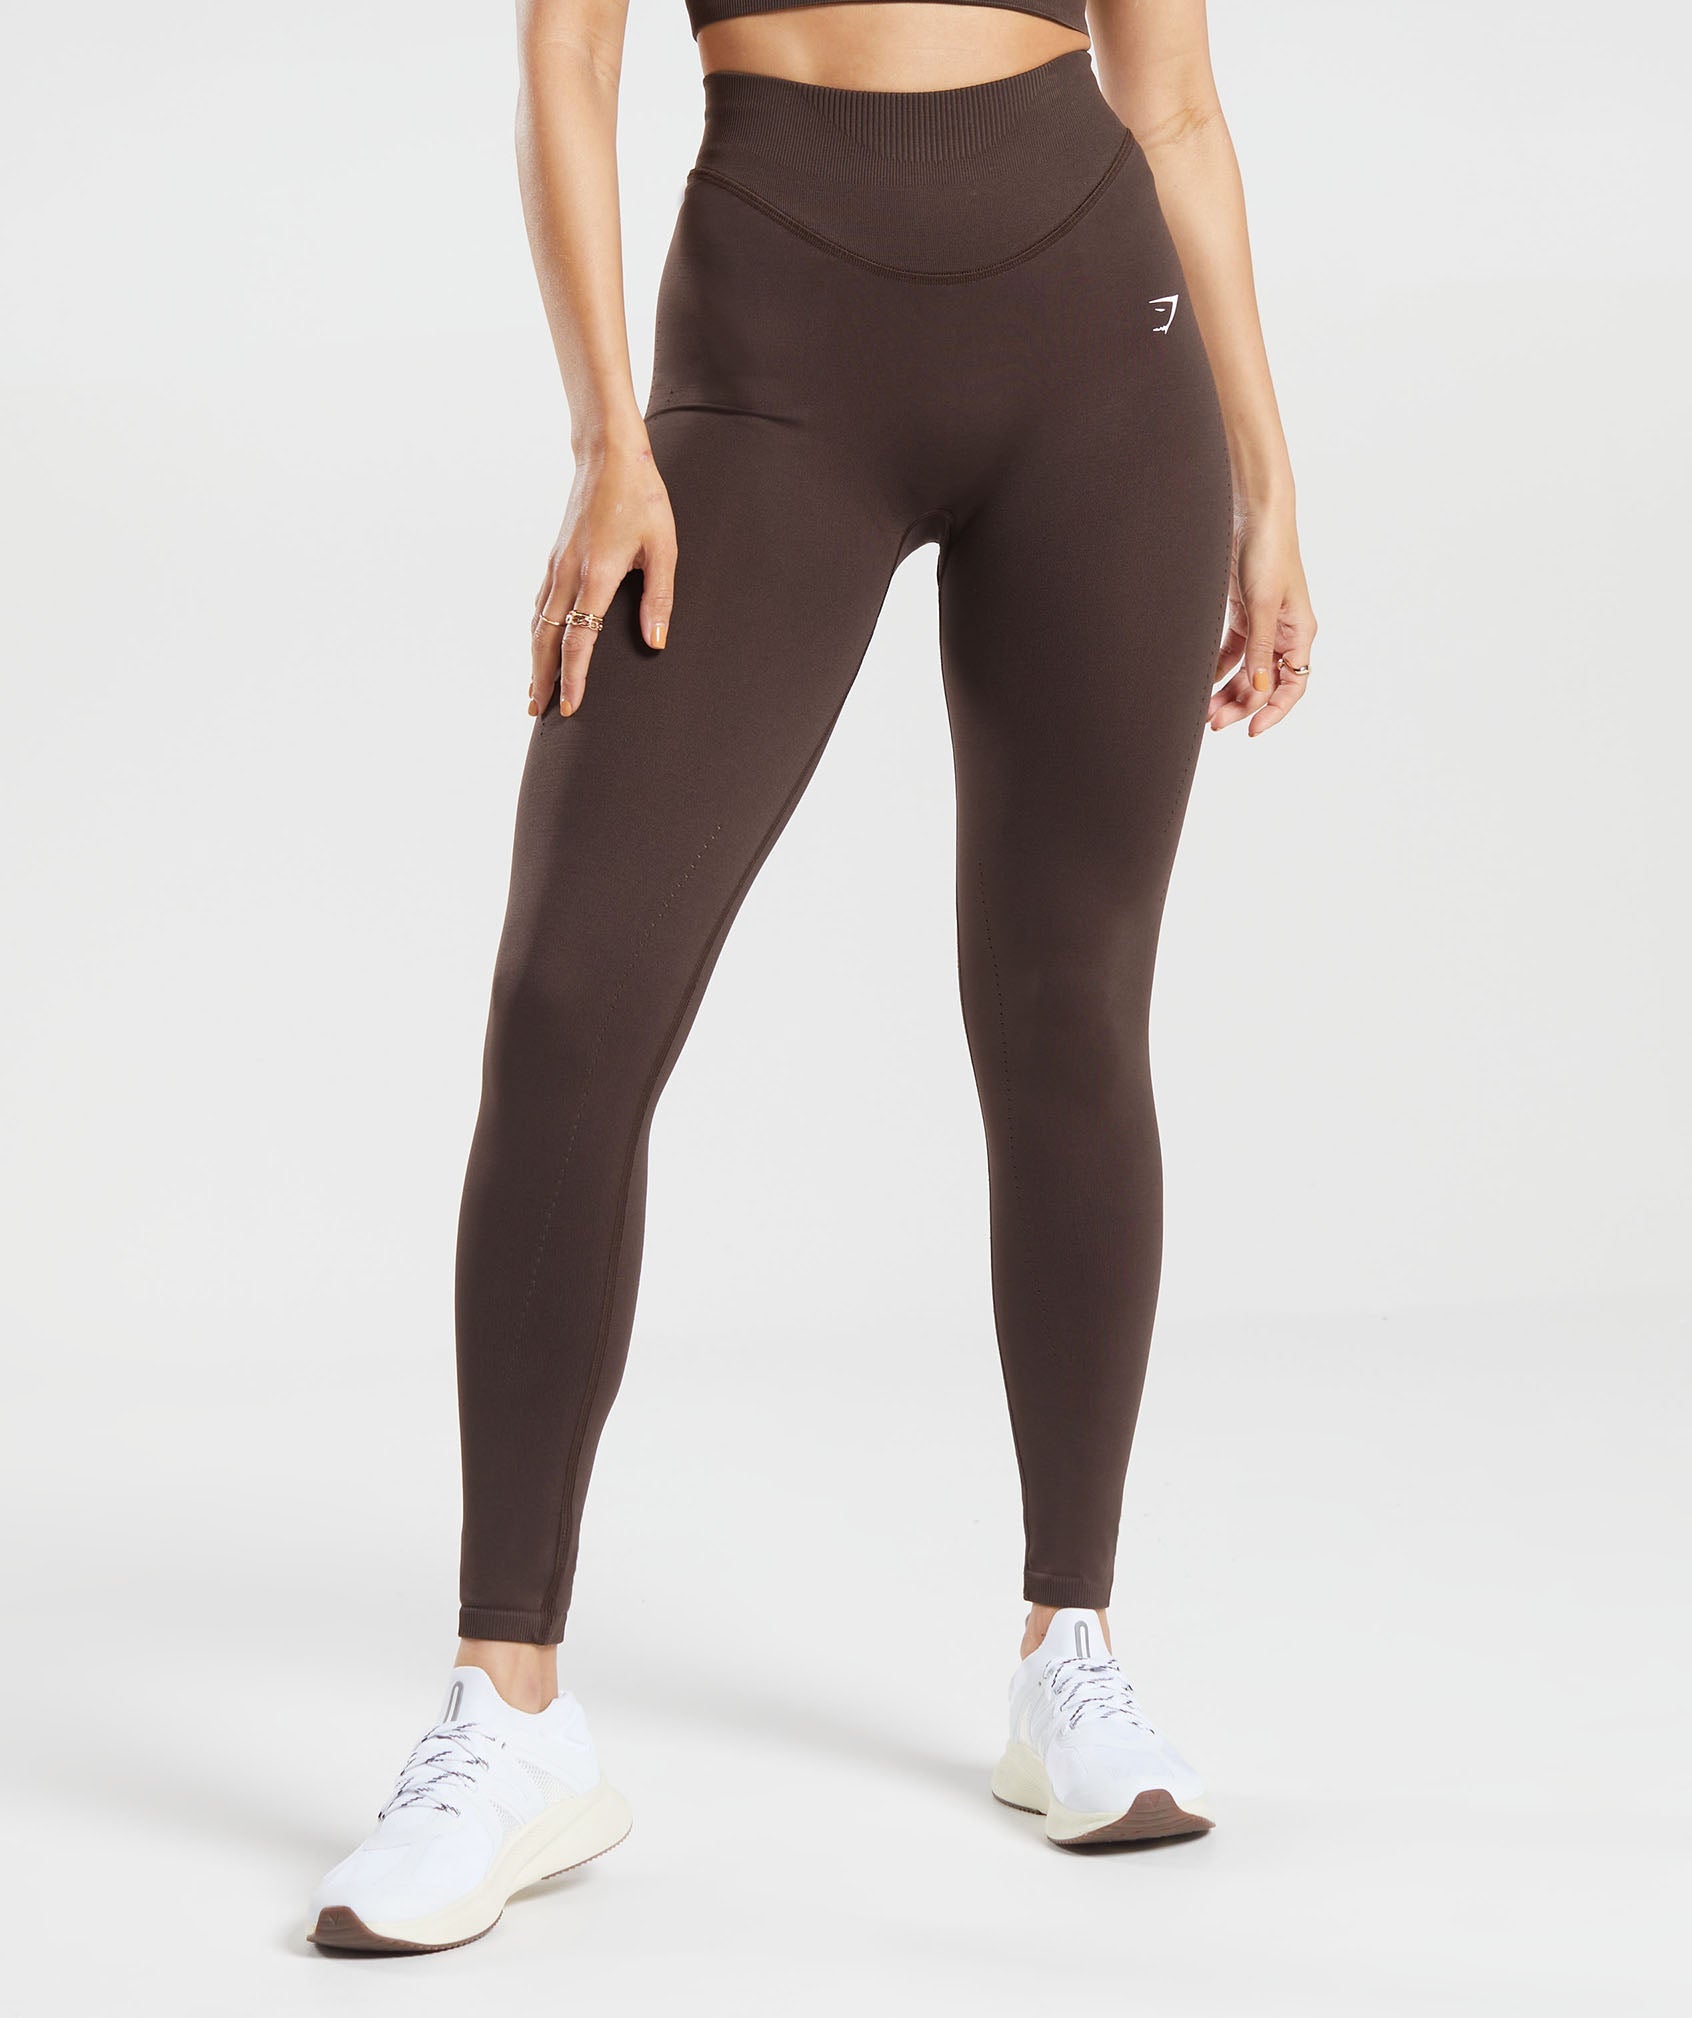 Sweat Pants for Women's 2023 Summer High Waist Workout Gym Seamless Leggings  Yoga Pants Tights Lightweight Pants (Black, M) : : Fashion